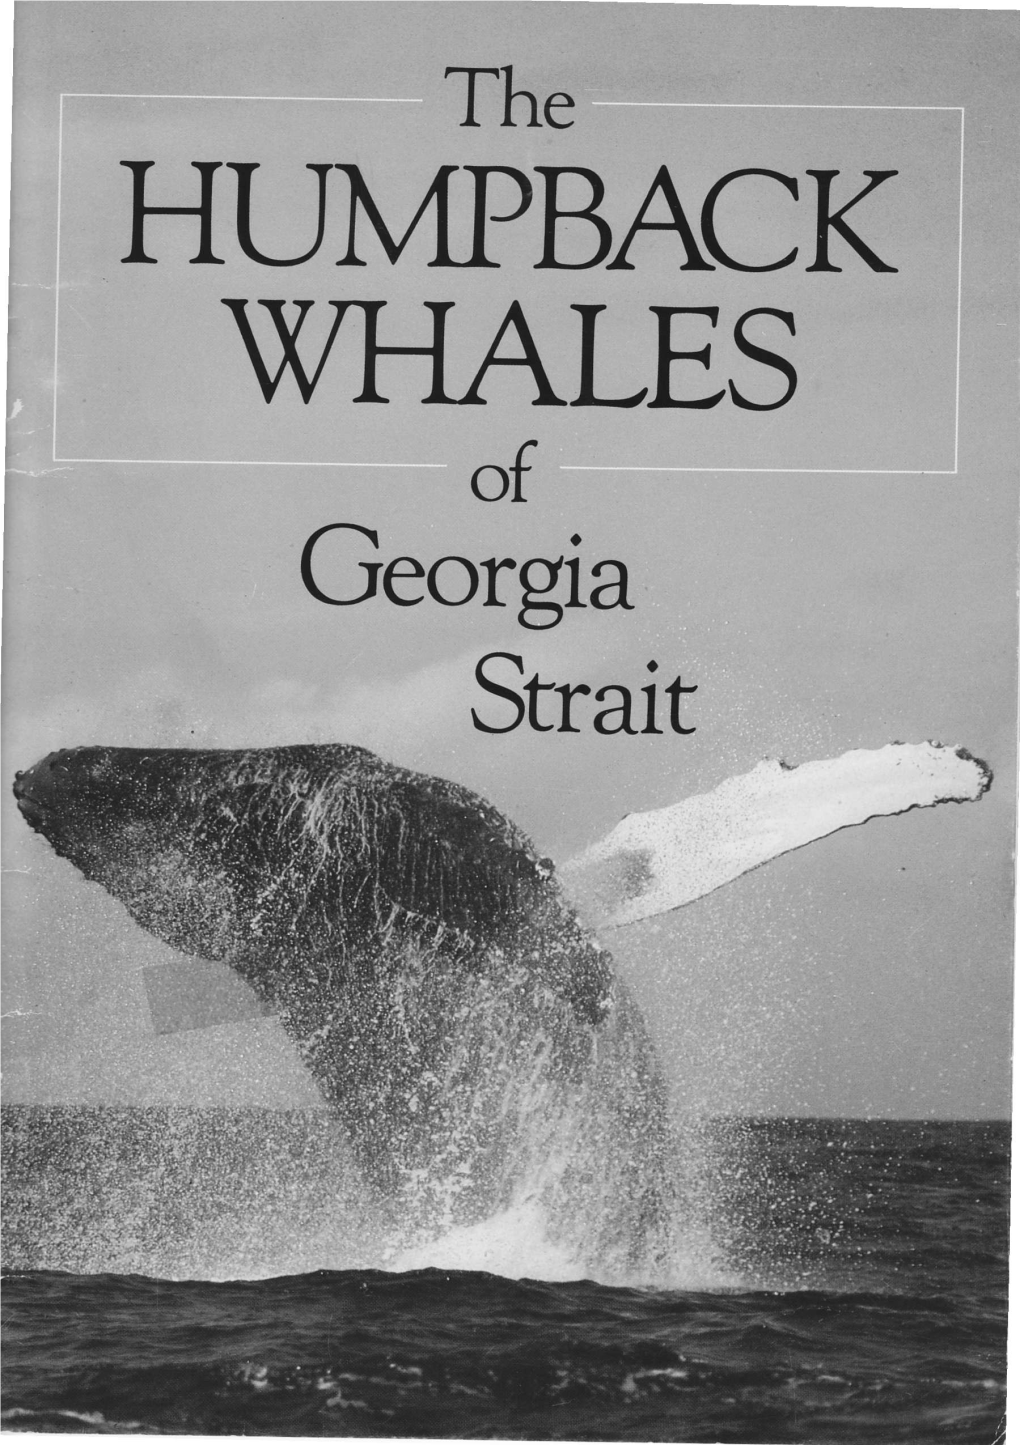 The Humpback Whales of Georgia Strait